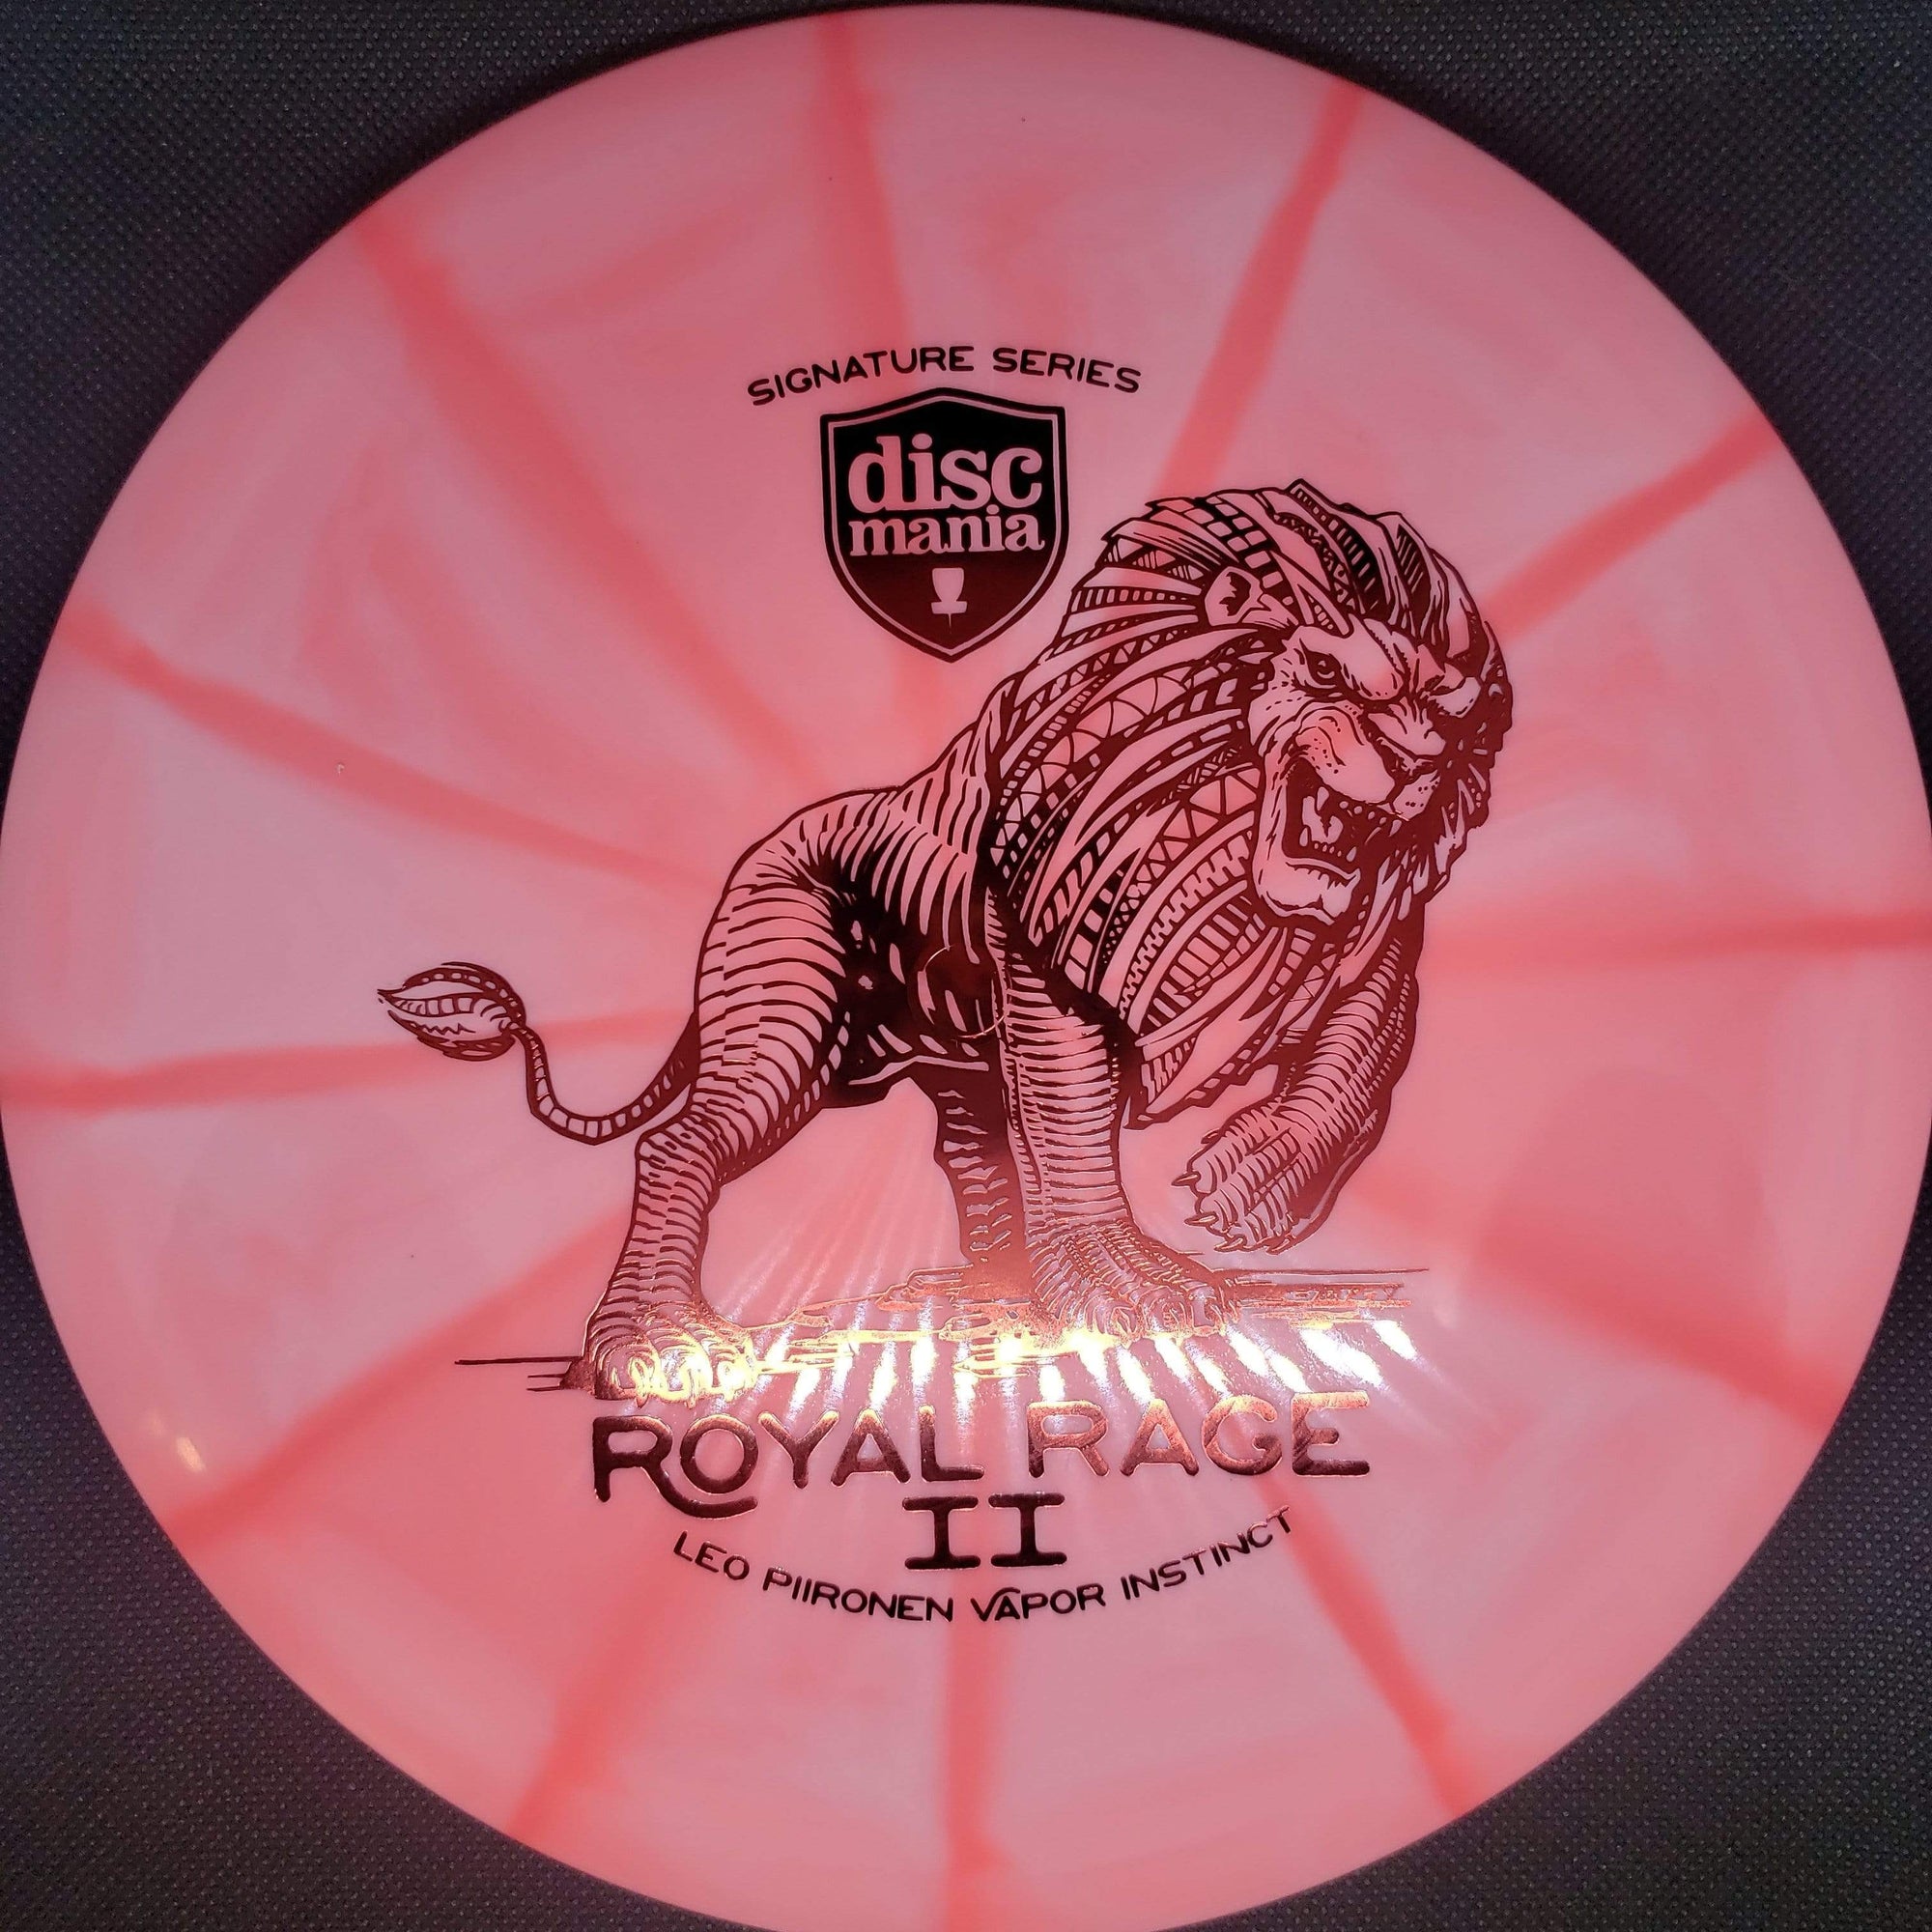 Discmania Fairway Driver Pink Red Stamp 3 173g Royal Rage 2 - Leo Piironen Signature Lux Vapor Instinct